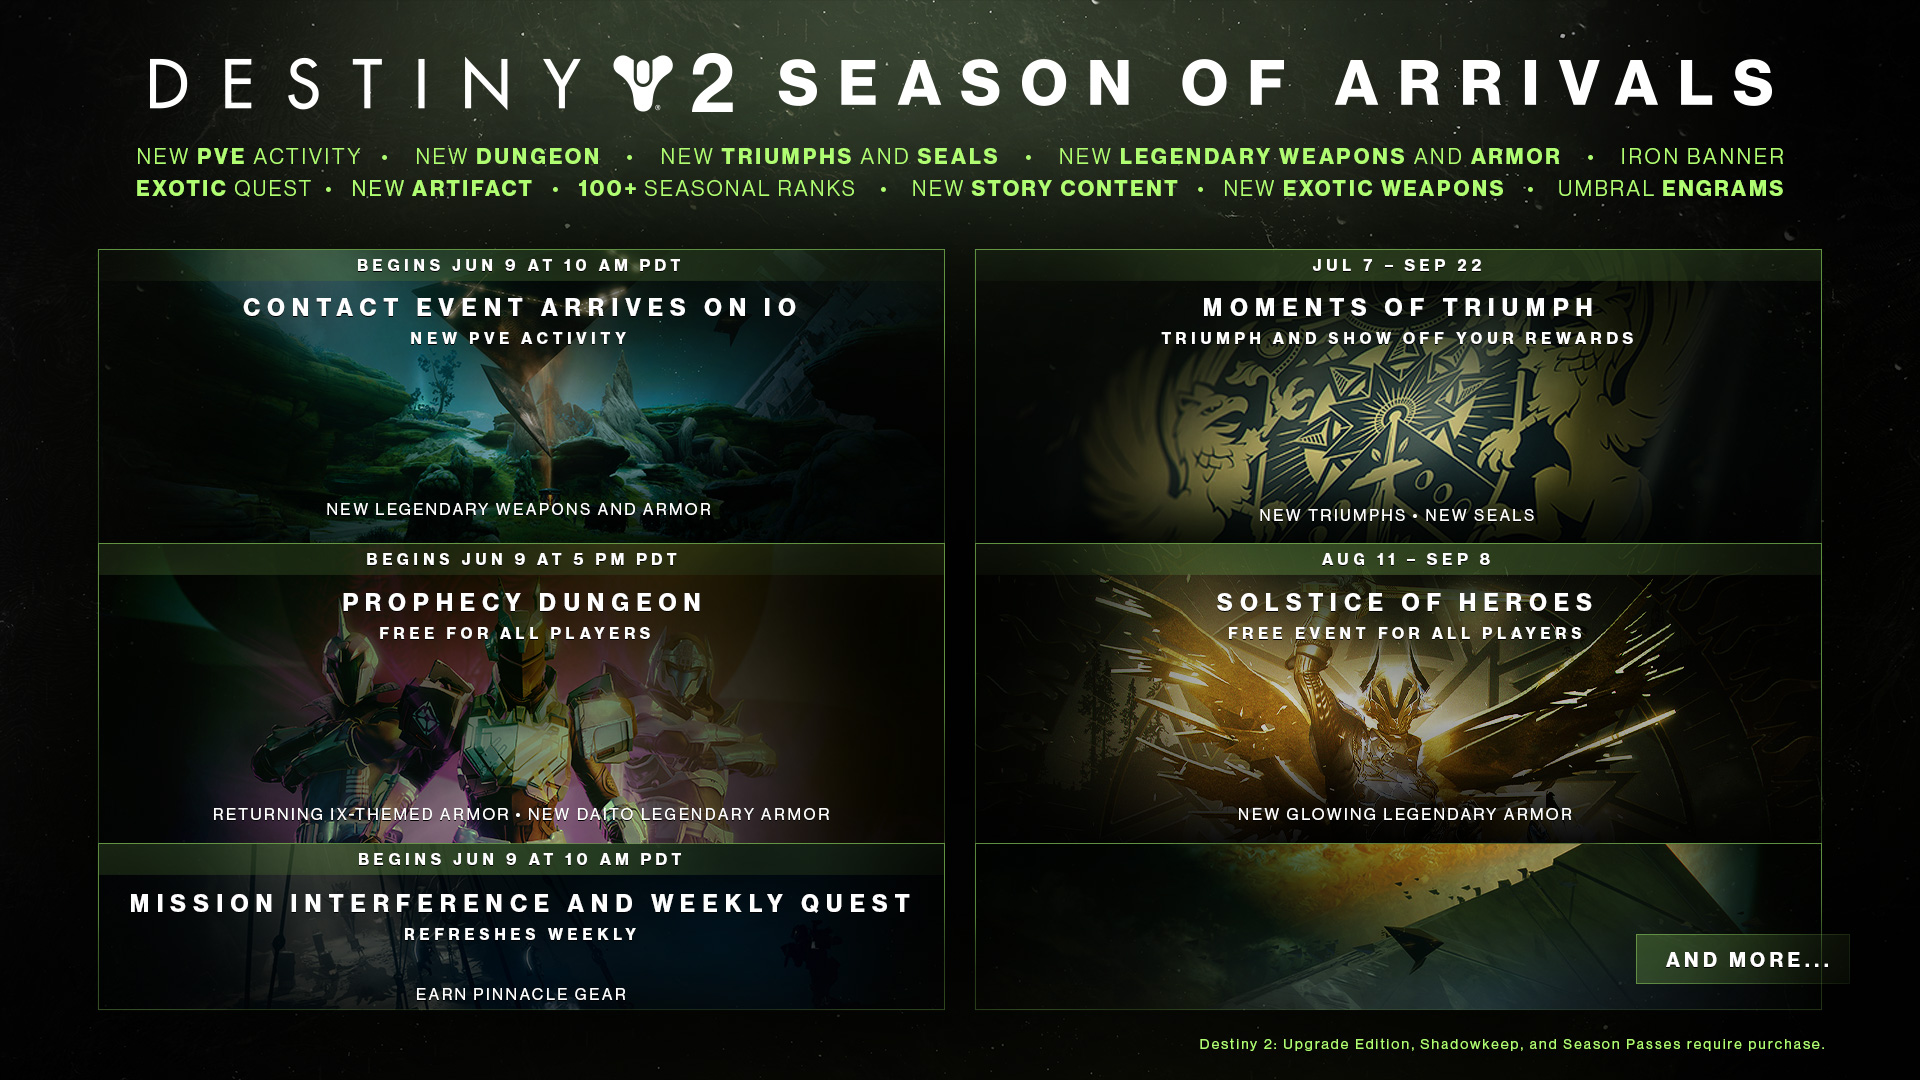 Destiny 2 Season of Arrivals calendar